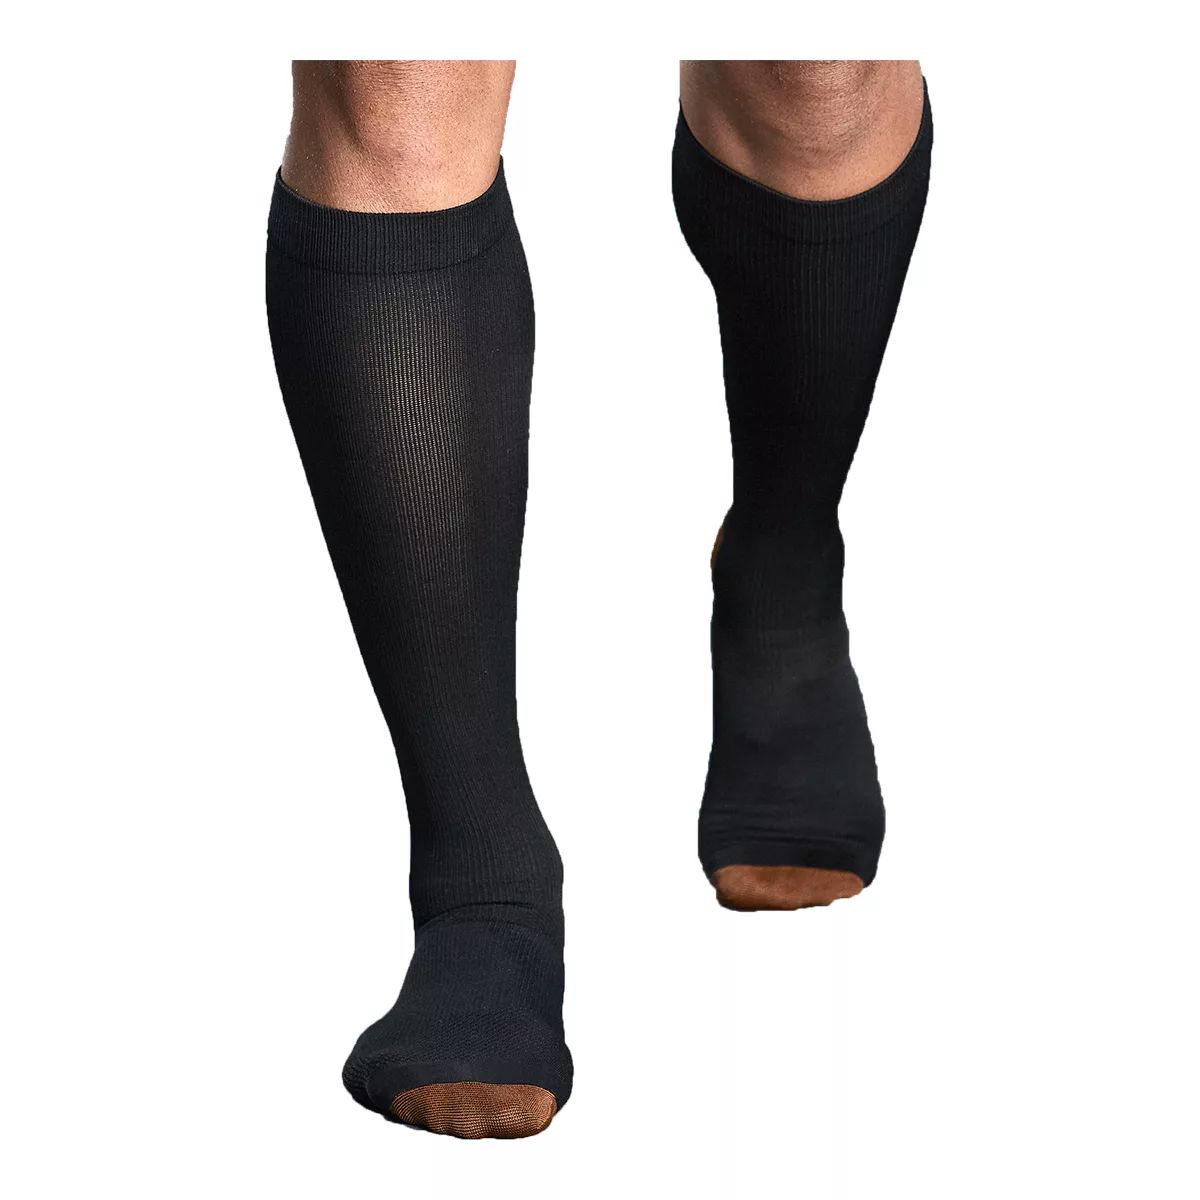 Tommie Copper Sport Compression Knee-High Socks, 2-Pack, Small/Medium, 2  Count per Pack – BrickSeek